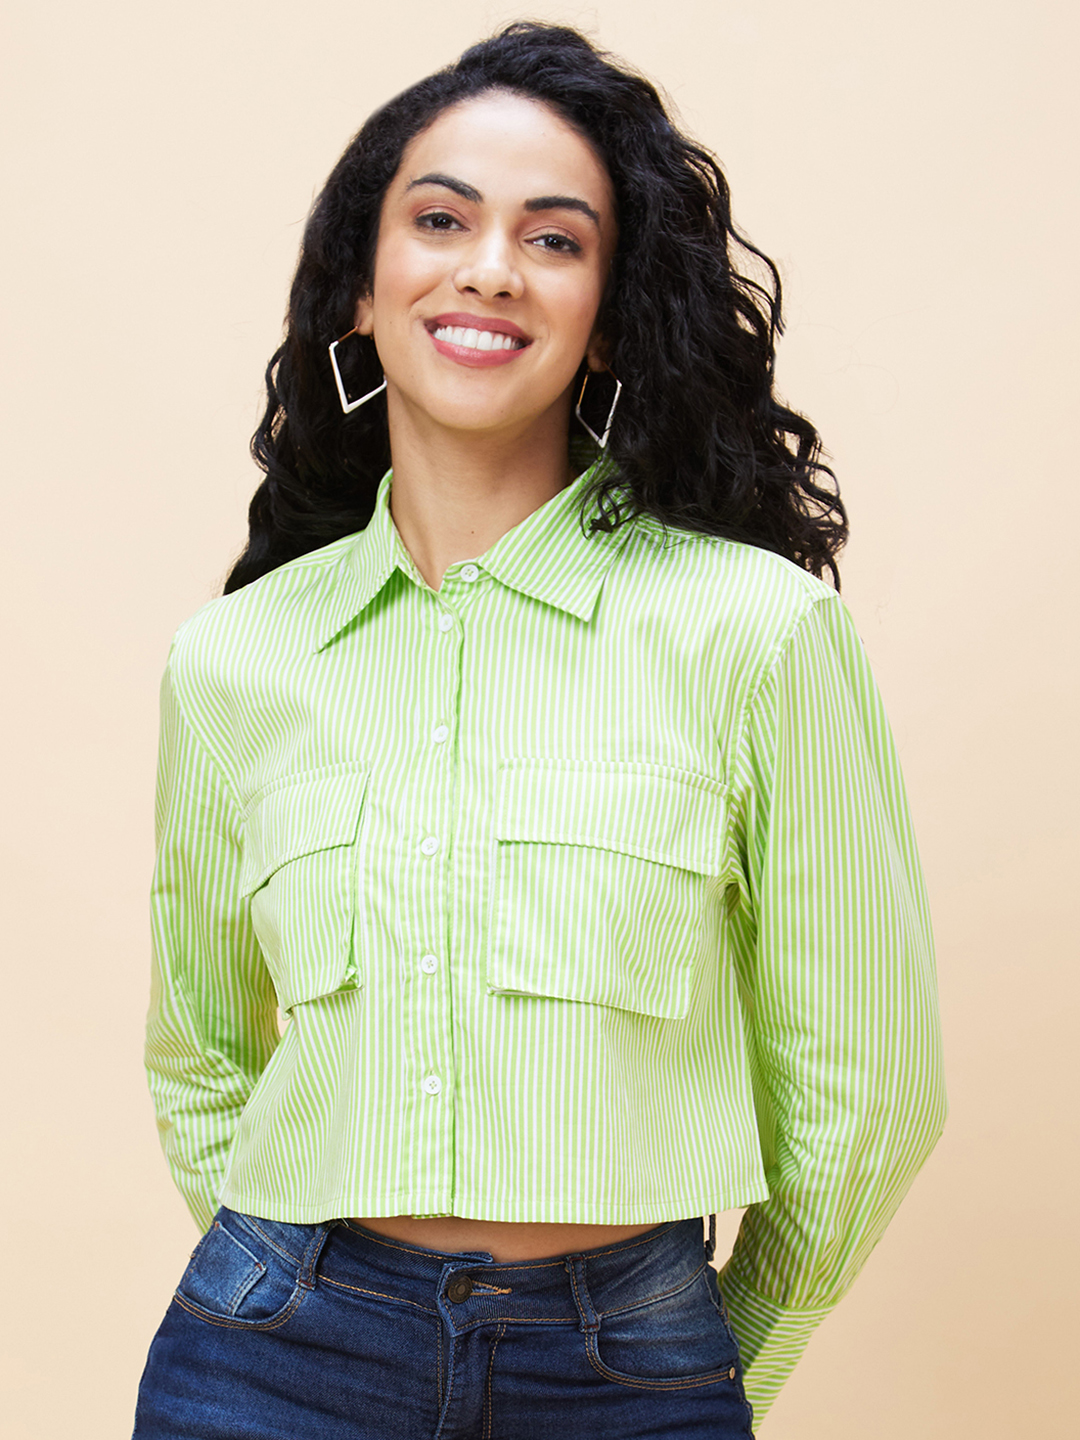 Globus Women Green Striped Casual Shirt Style Crop Top